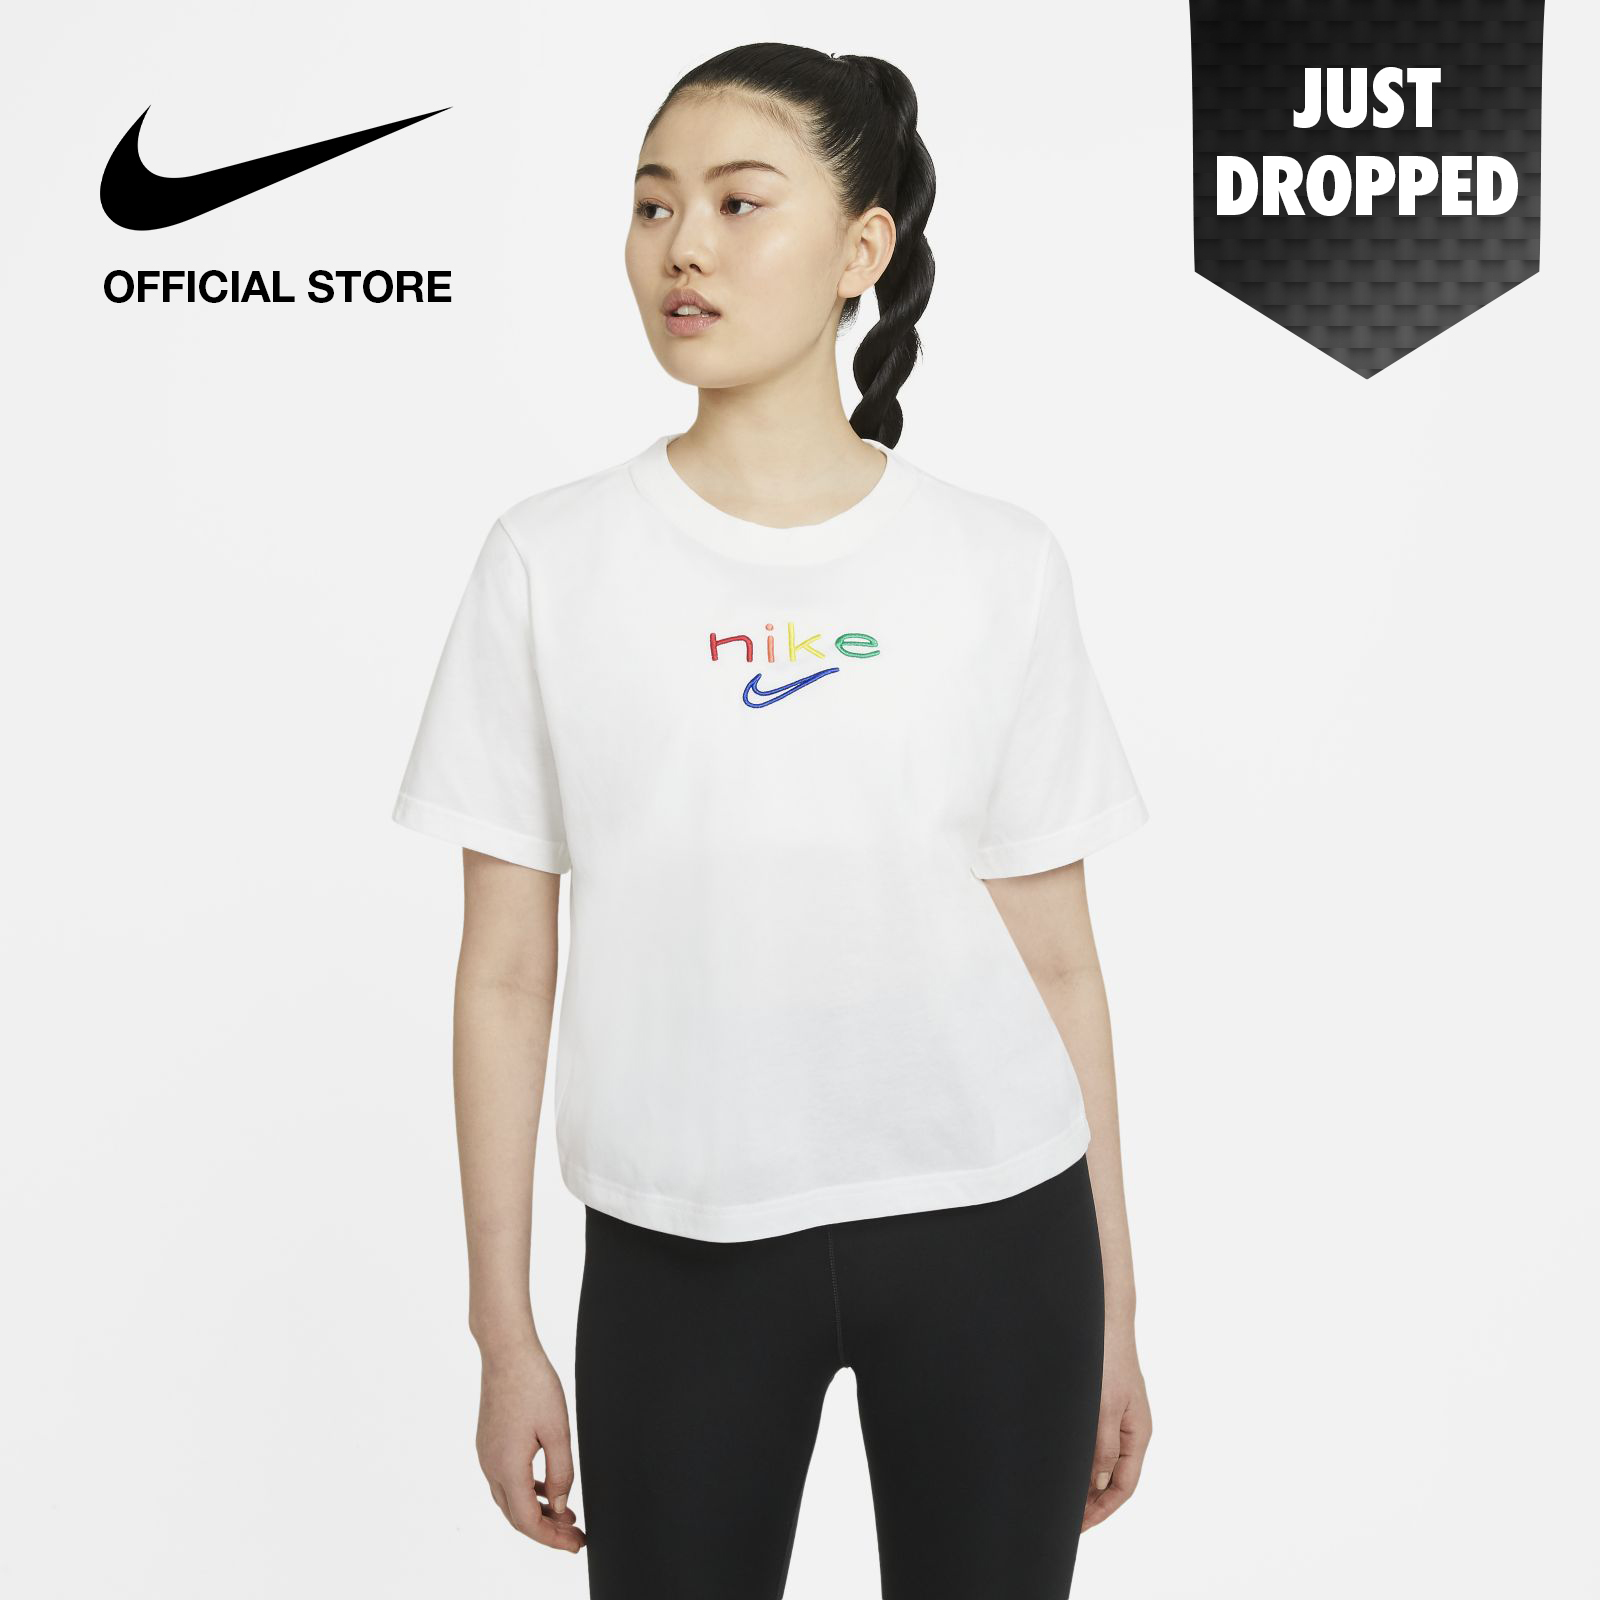 Nike Women's Dri-FIT Boxy Rainbow Training T-Shirt - White ไนกี้ เสื้อยืดเทรนนิ่งผู้หญิง ดรายฟิต บ๊อกซี่ เรนโบว์ - สีขาว